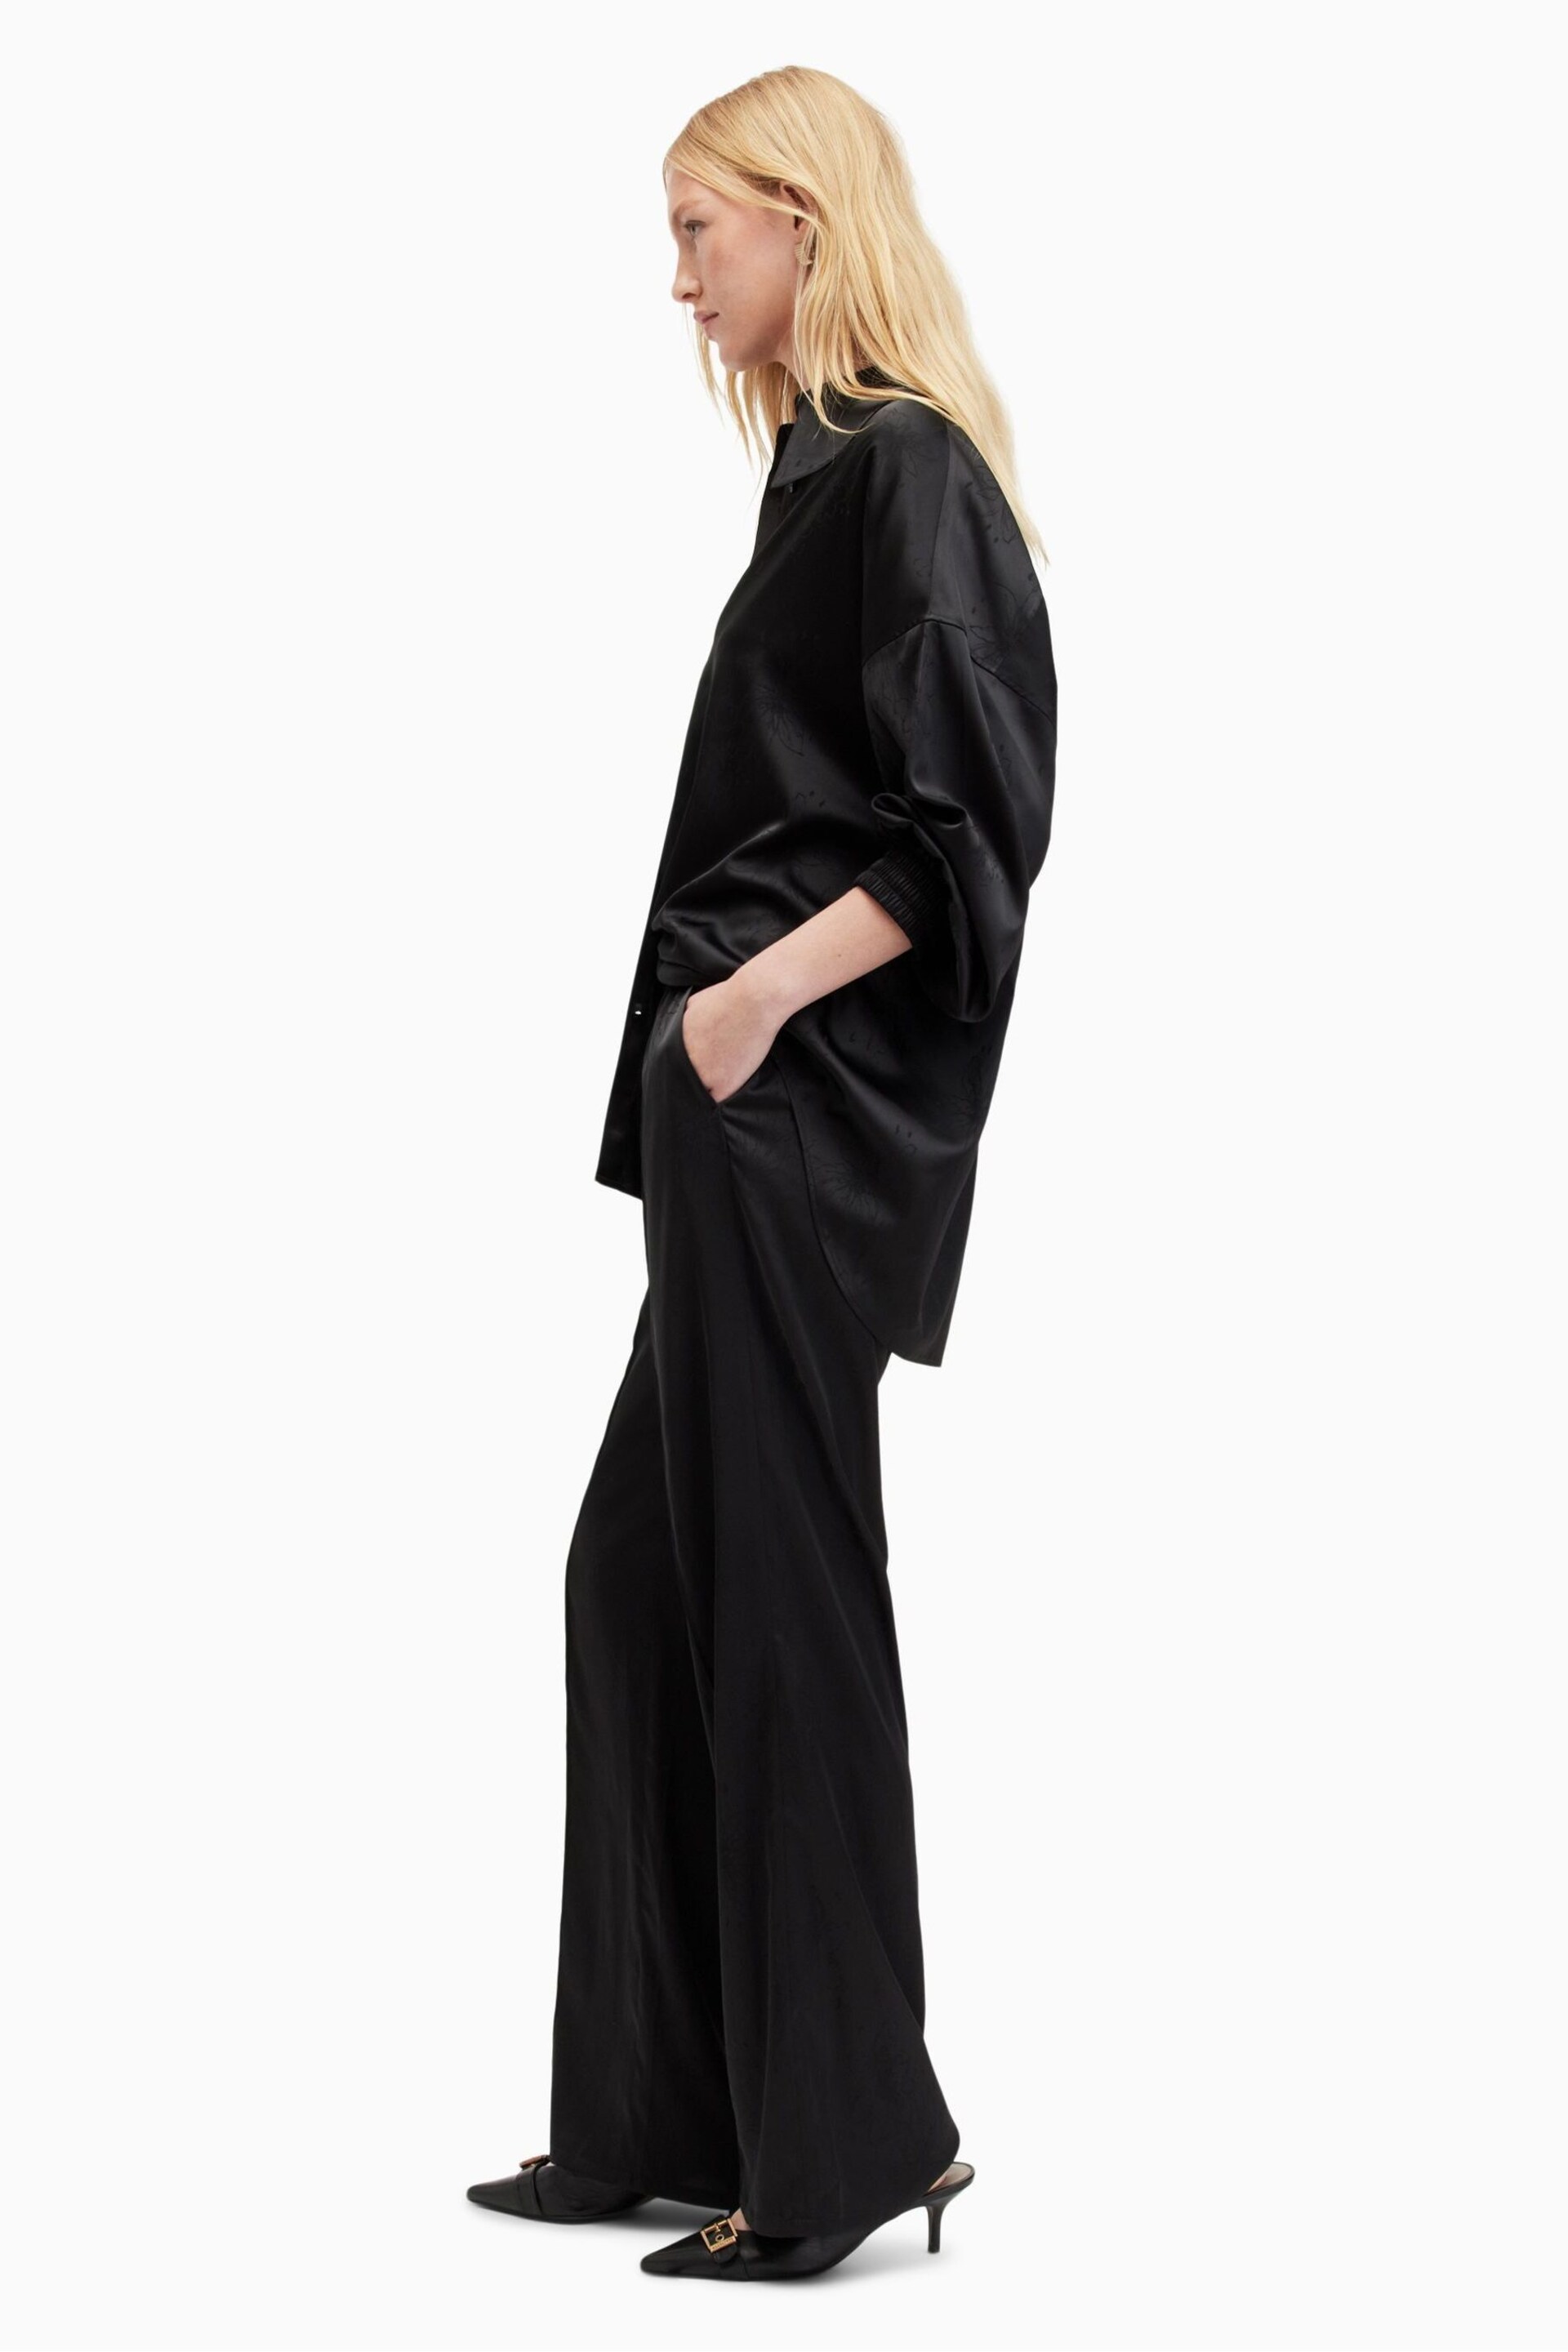 AllSaints Black Charli Jacq Trousers - Image 4 of 7